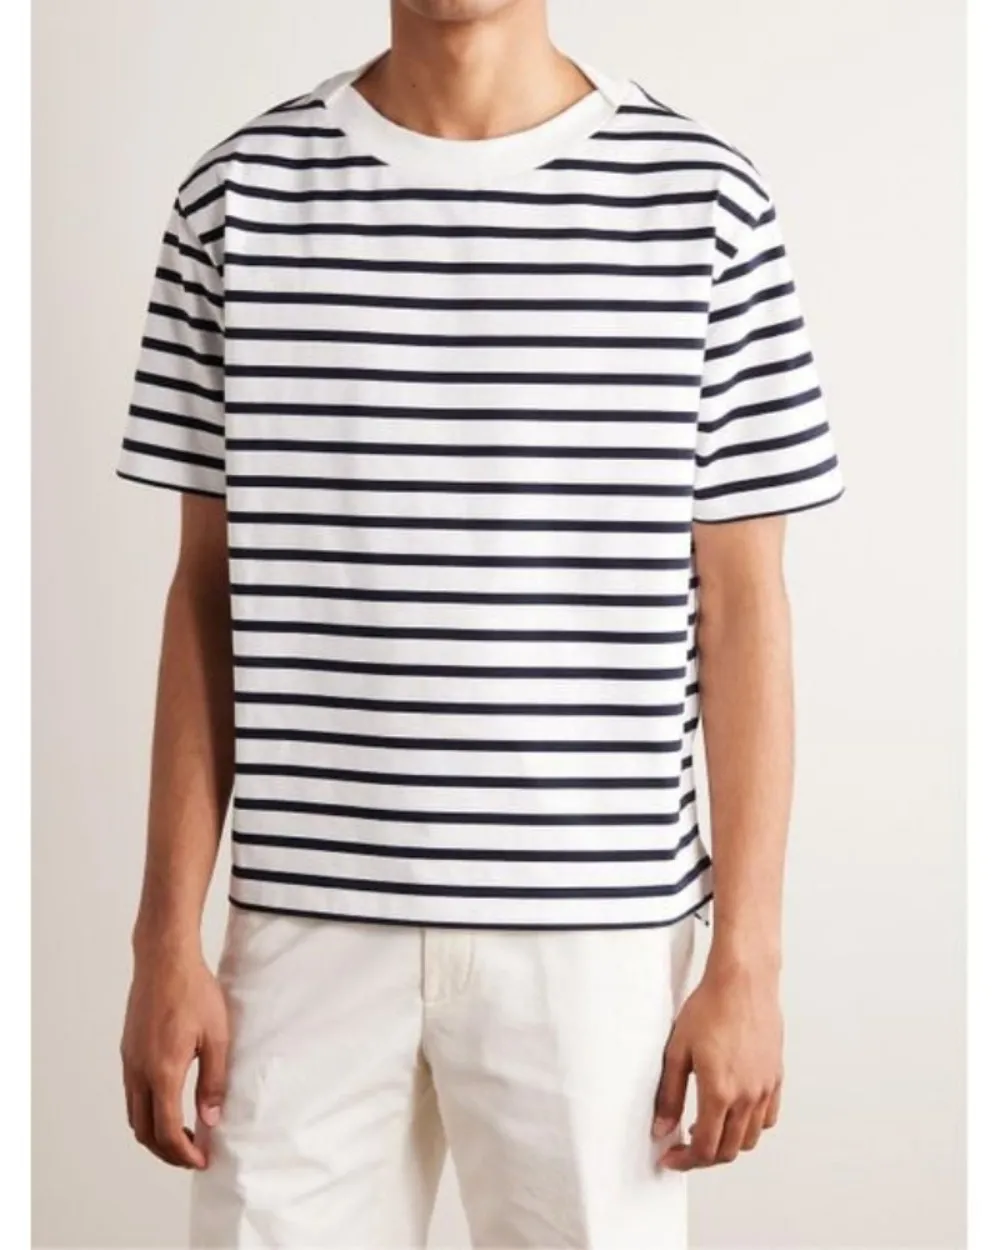 Camiseta de hombre Loro Piana, camiseta de algodón a rayas azules para hombre, camisetas de manga corta, camiseta de verano